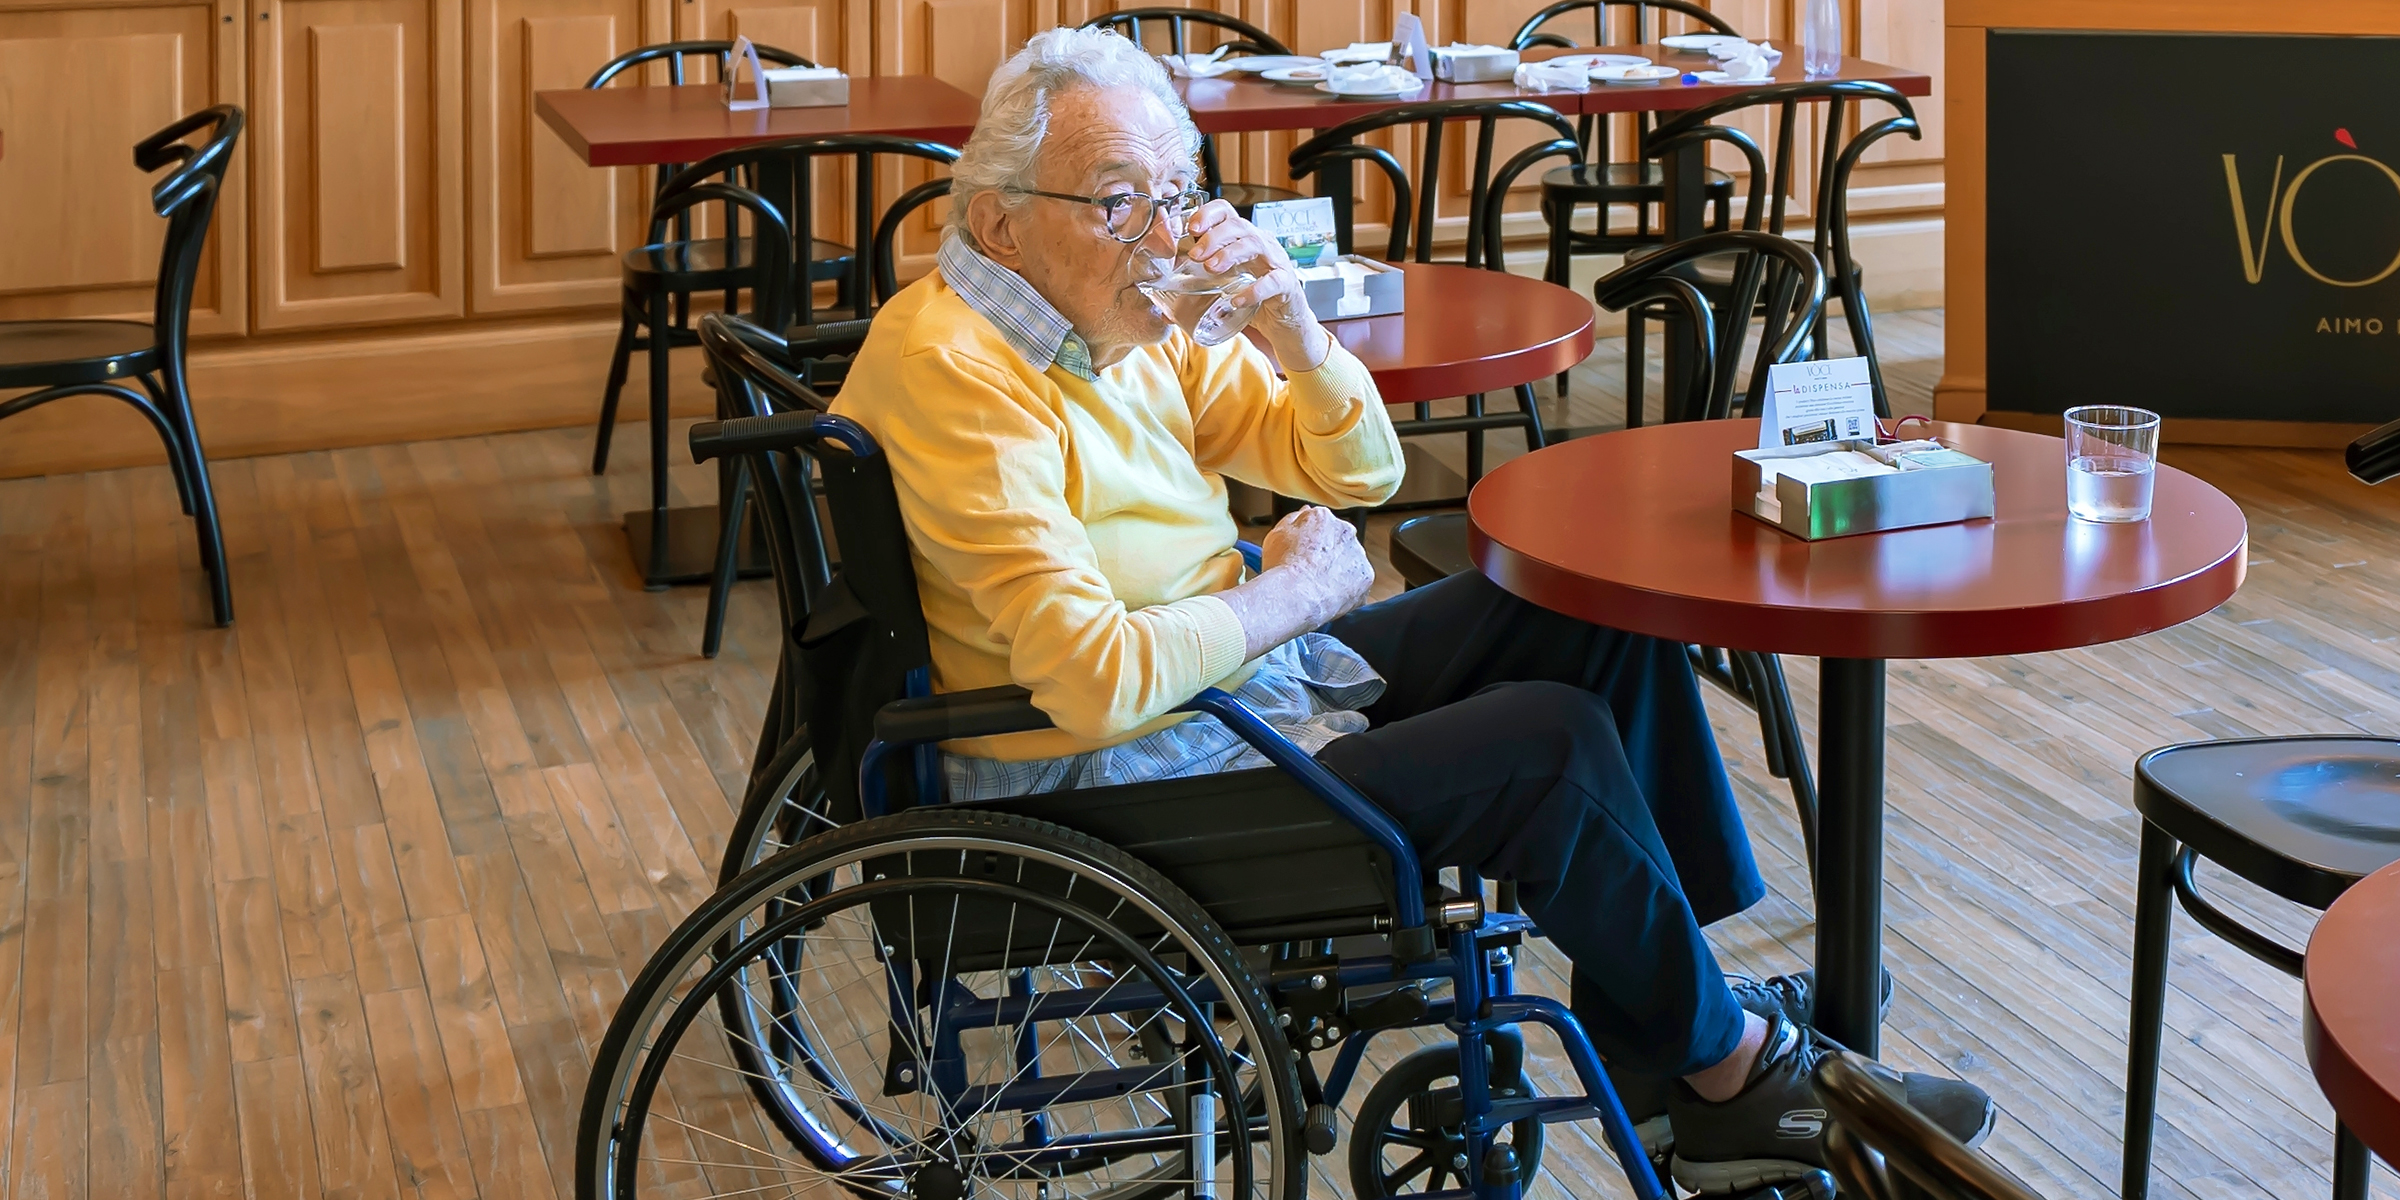 An elderly man in a wheelchair drinking water in a restaurant | Source: Shutterstock